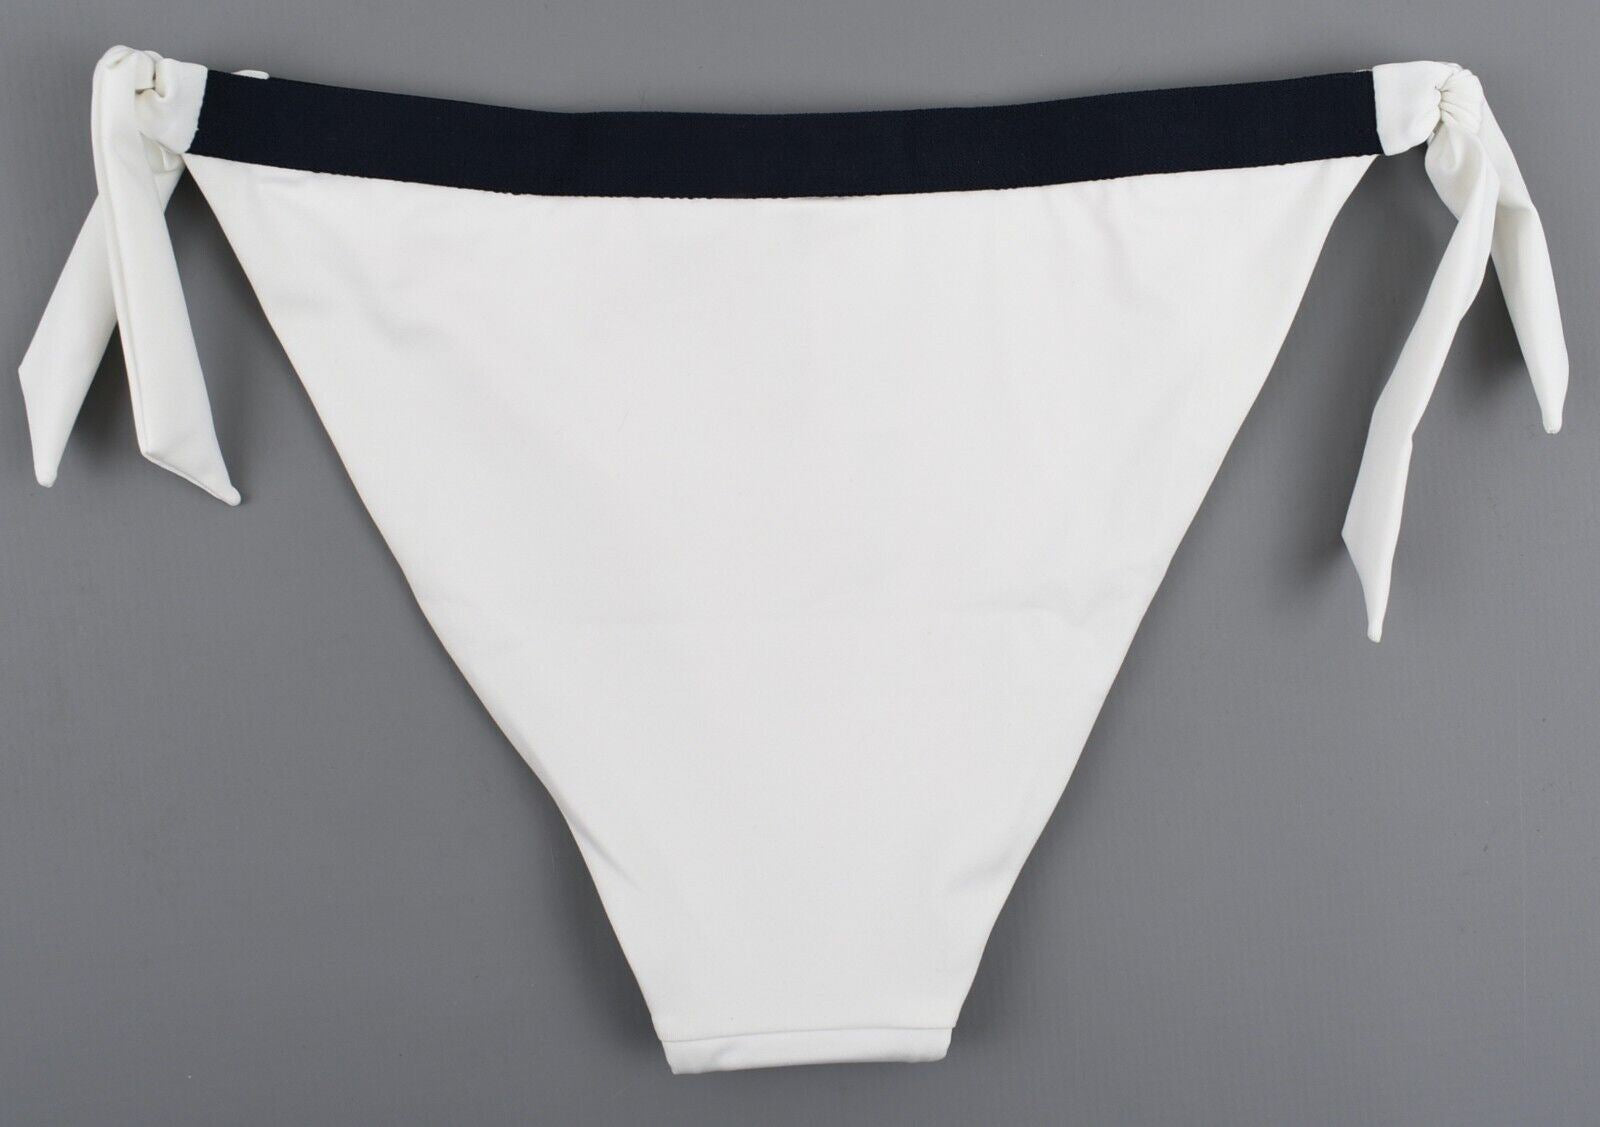 TOMMY HILFIGER Swimwear: Women's Side Tie Cheeky Bikini, Snow White, M (UK 12)